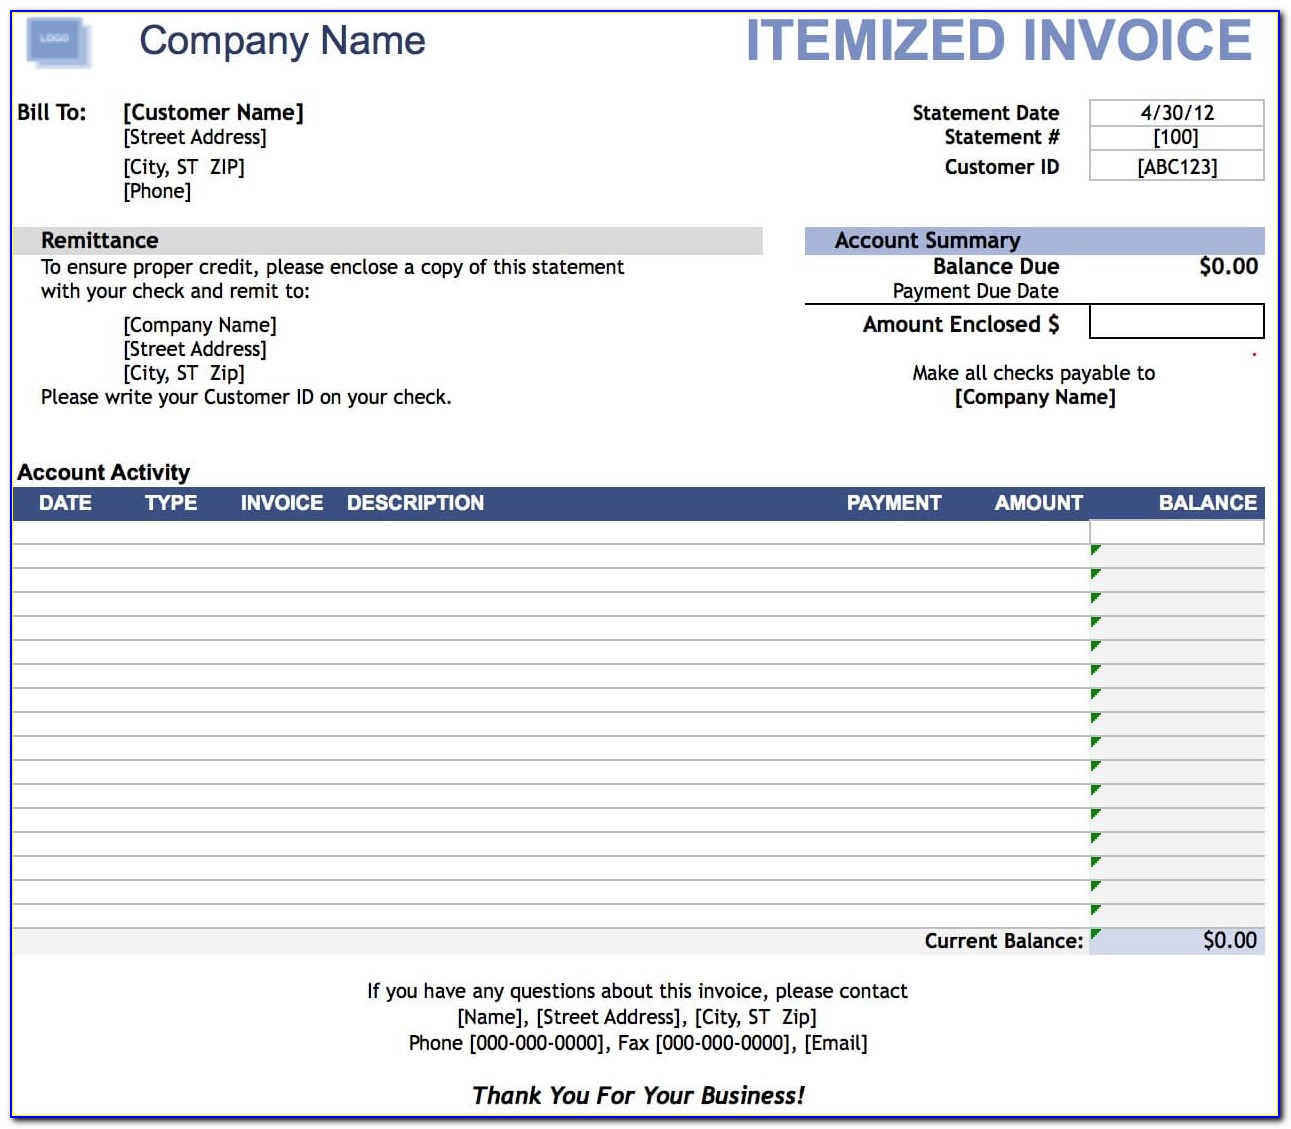 Itemized Invoice Sample